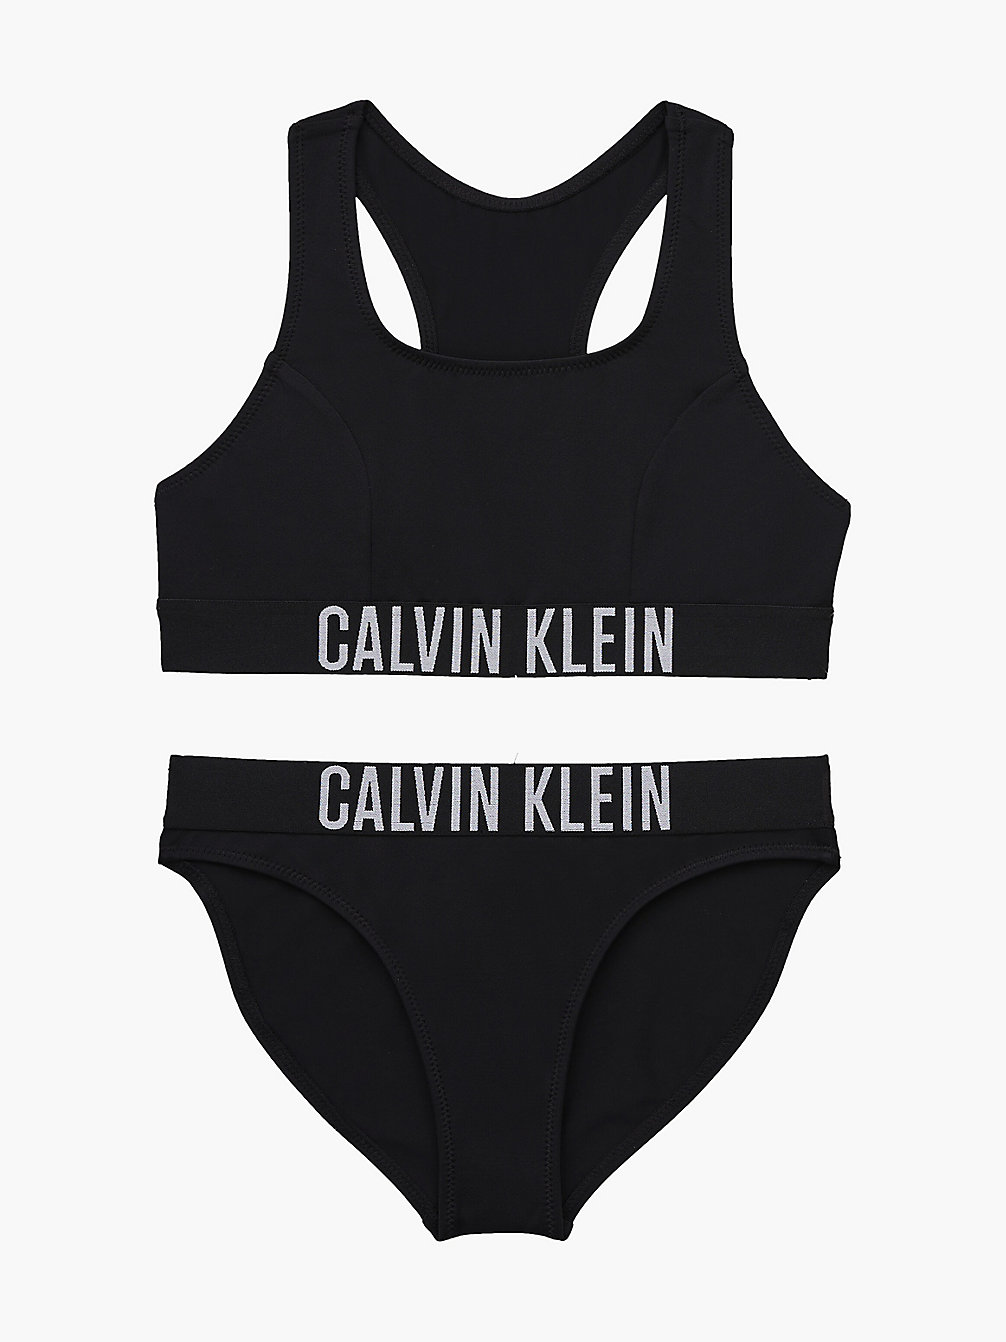 Set Bikini Bambina Con Brassiere - Intense Power > PVH BLACK > undefined girls > Calvin Klein